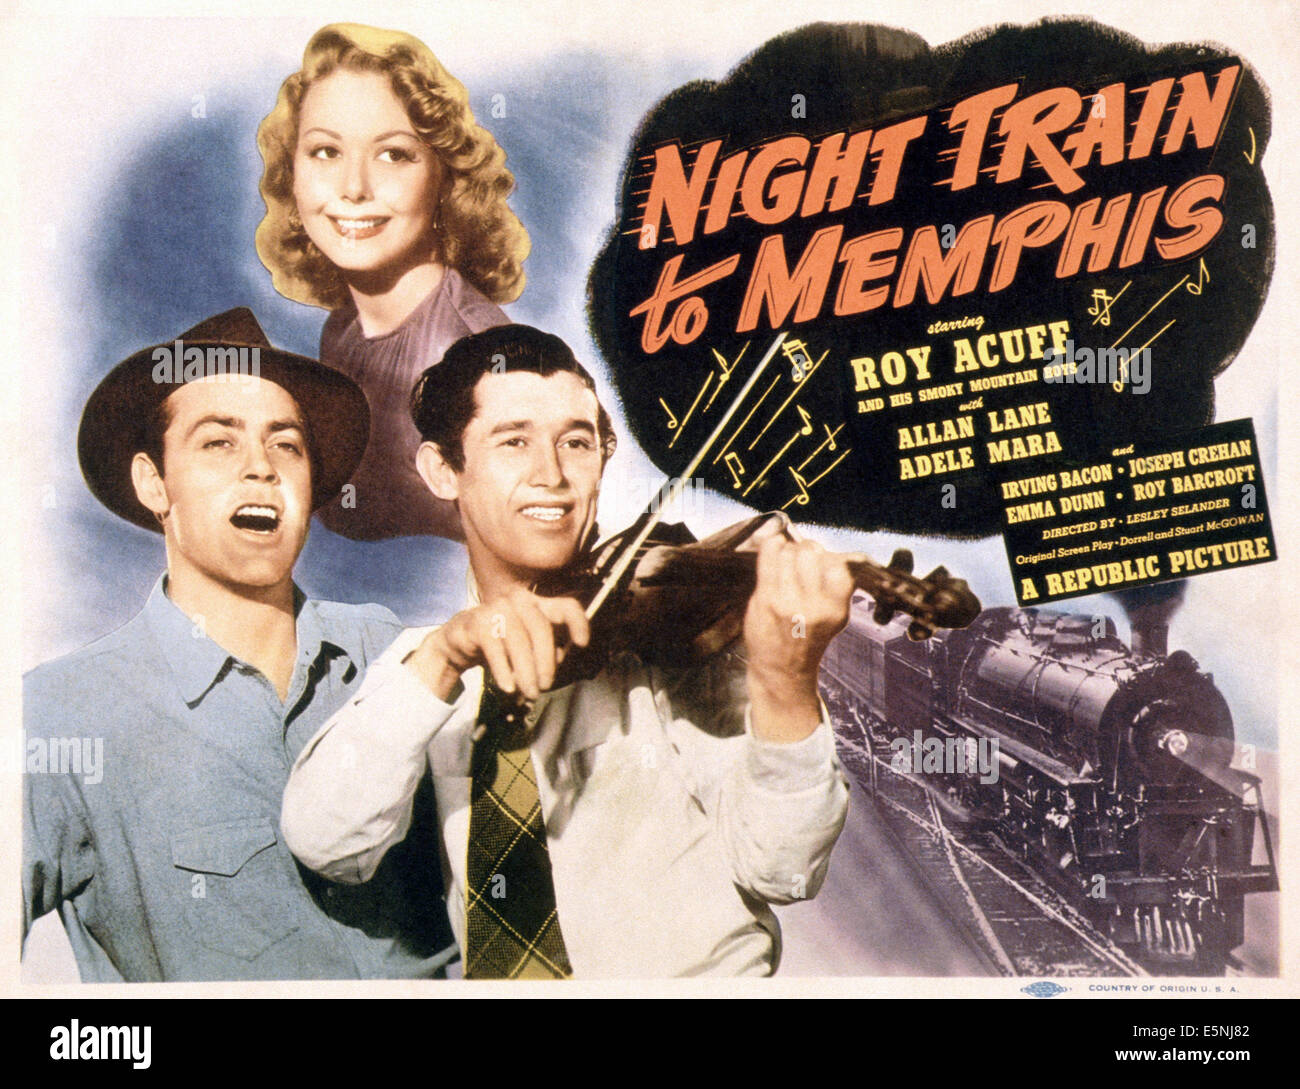 NIGHT TRAIN TO MEMPHIS, US poster, from left: Allan Lane, Adele Mara (rear), Roy Acuff, 1946 Stock Photo